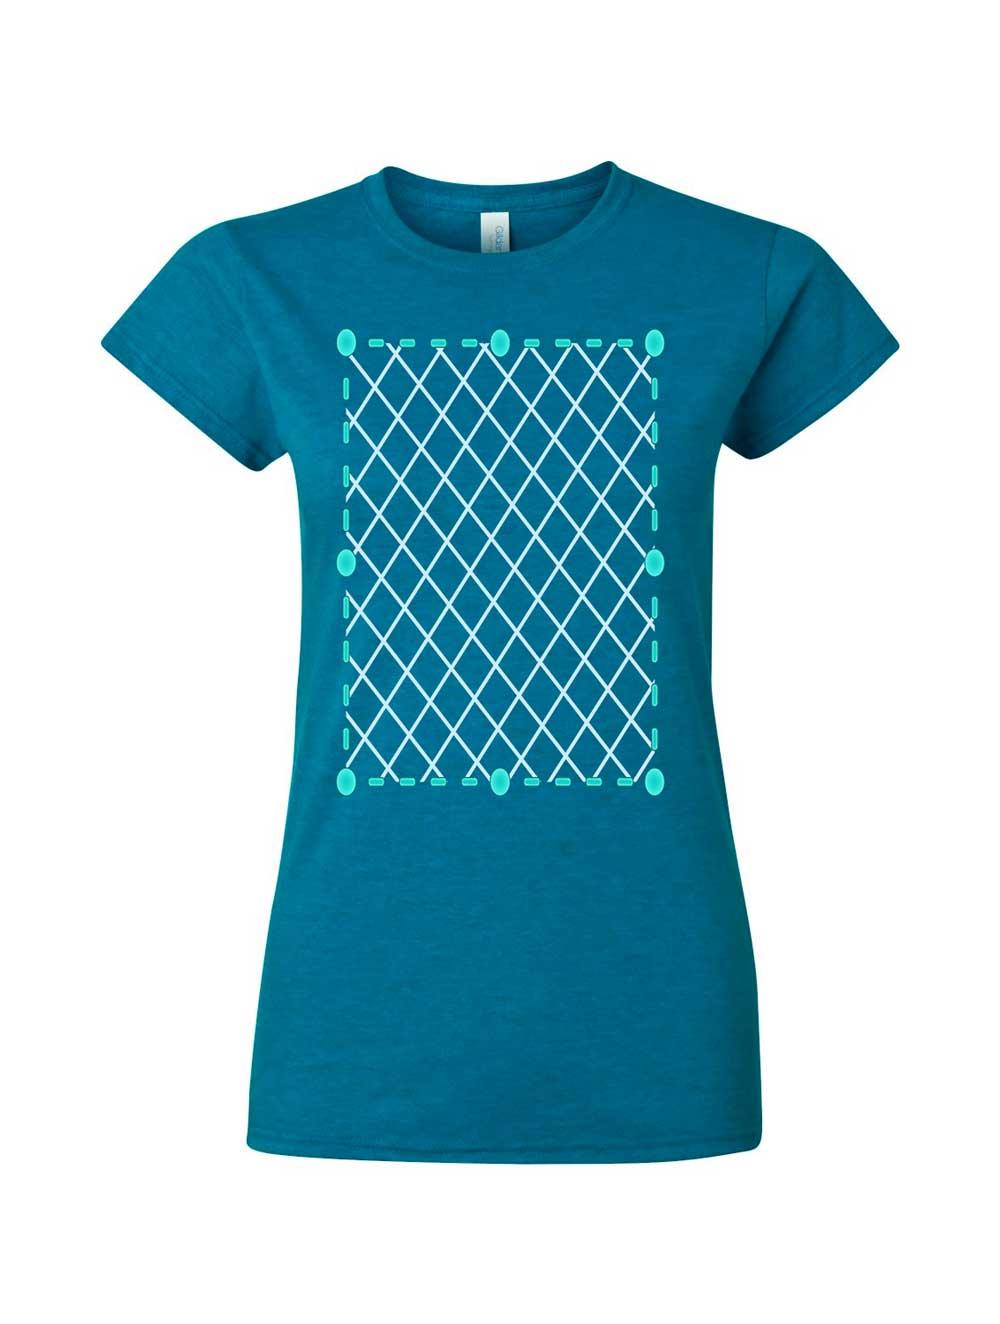 Gildan Softstyle Women's T-Shirt - Constantly Create Shop